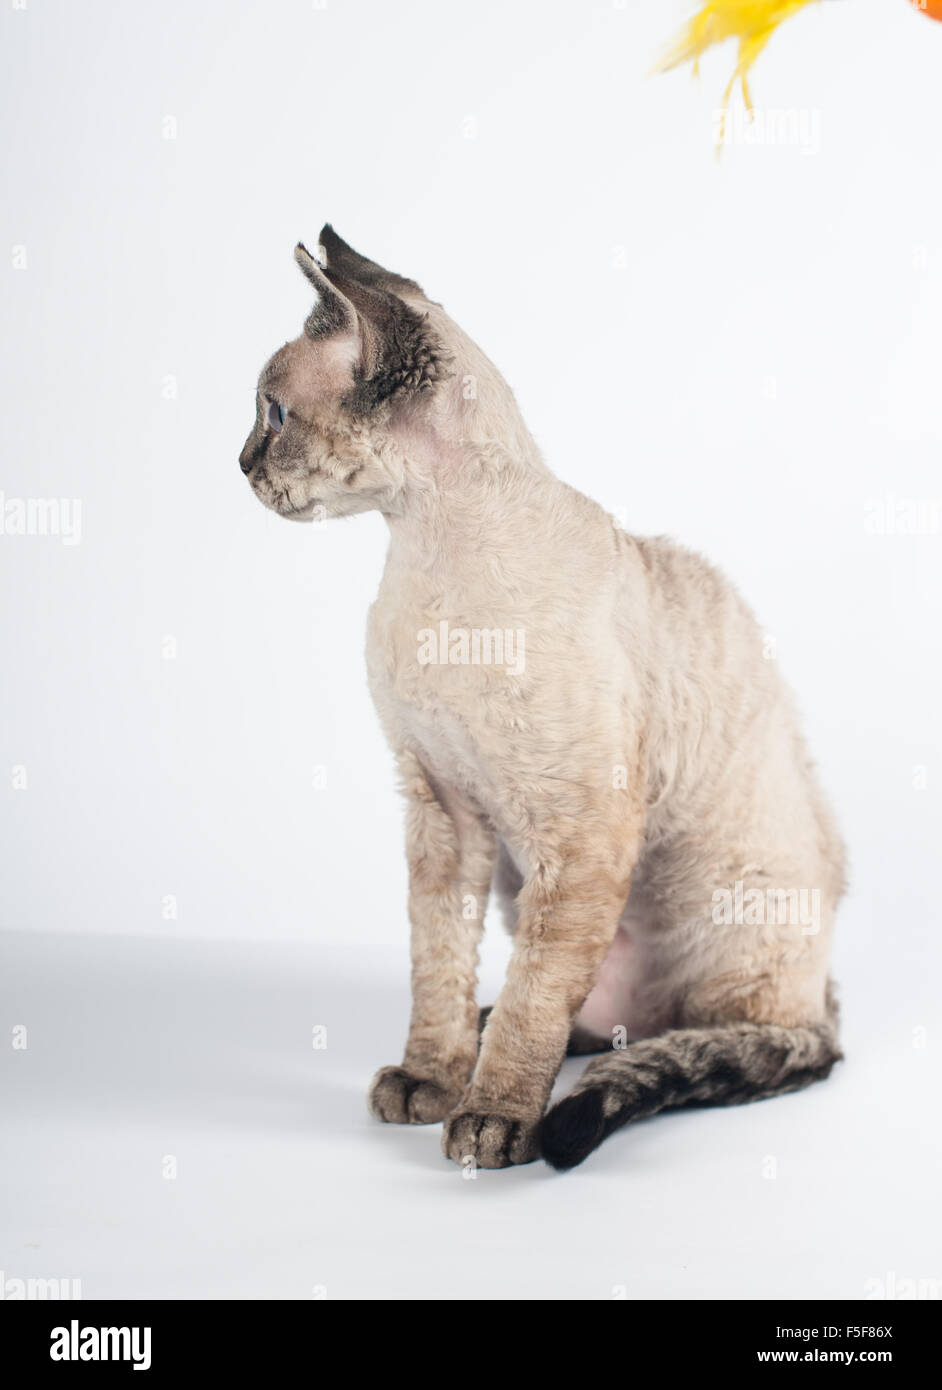 Devon rex cat on white background Stock Photo